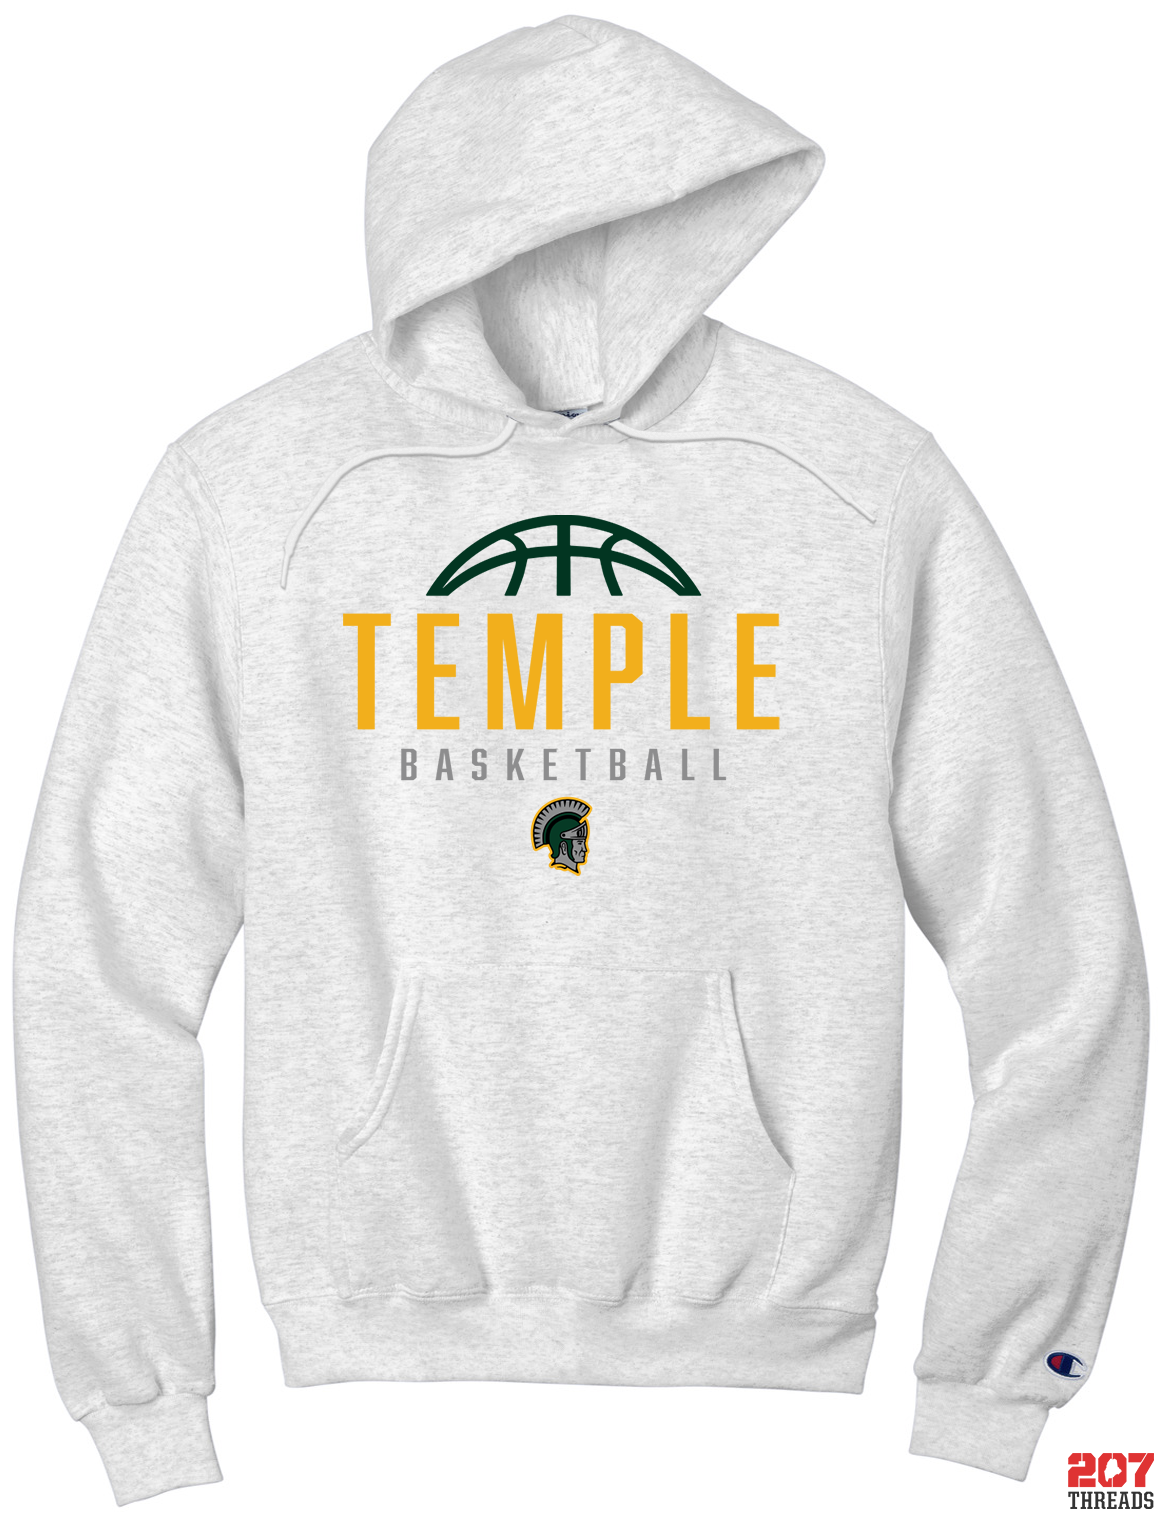 Temple Basketball Hoodie